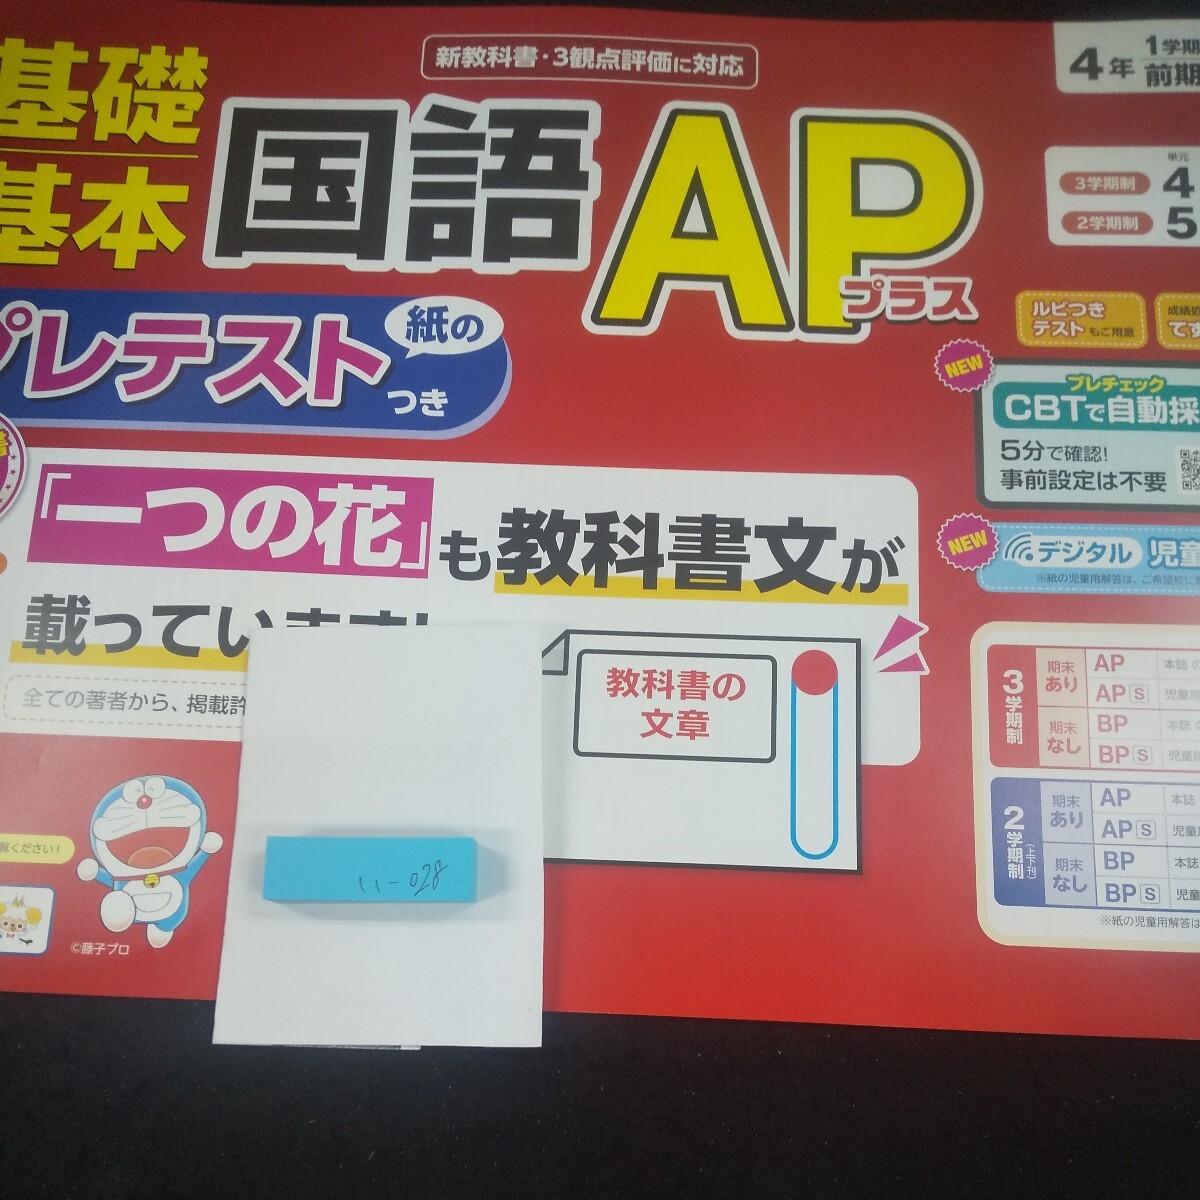 IY -028 Основной базовый язык AP Plus 4 -й год Meiji Books Doraemon Вопросы Print Learning Drill Начальная школа.